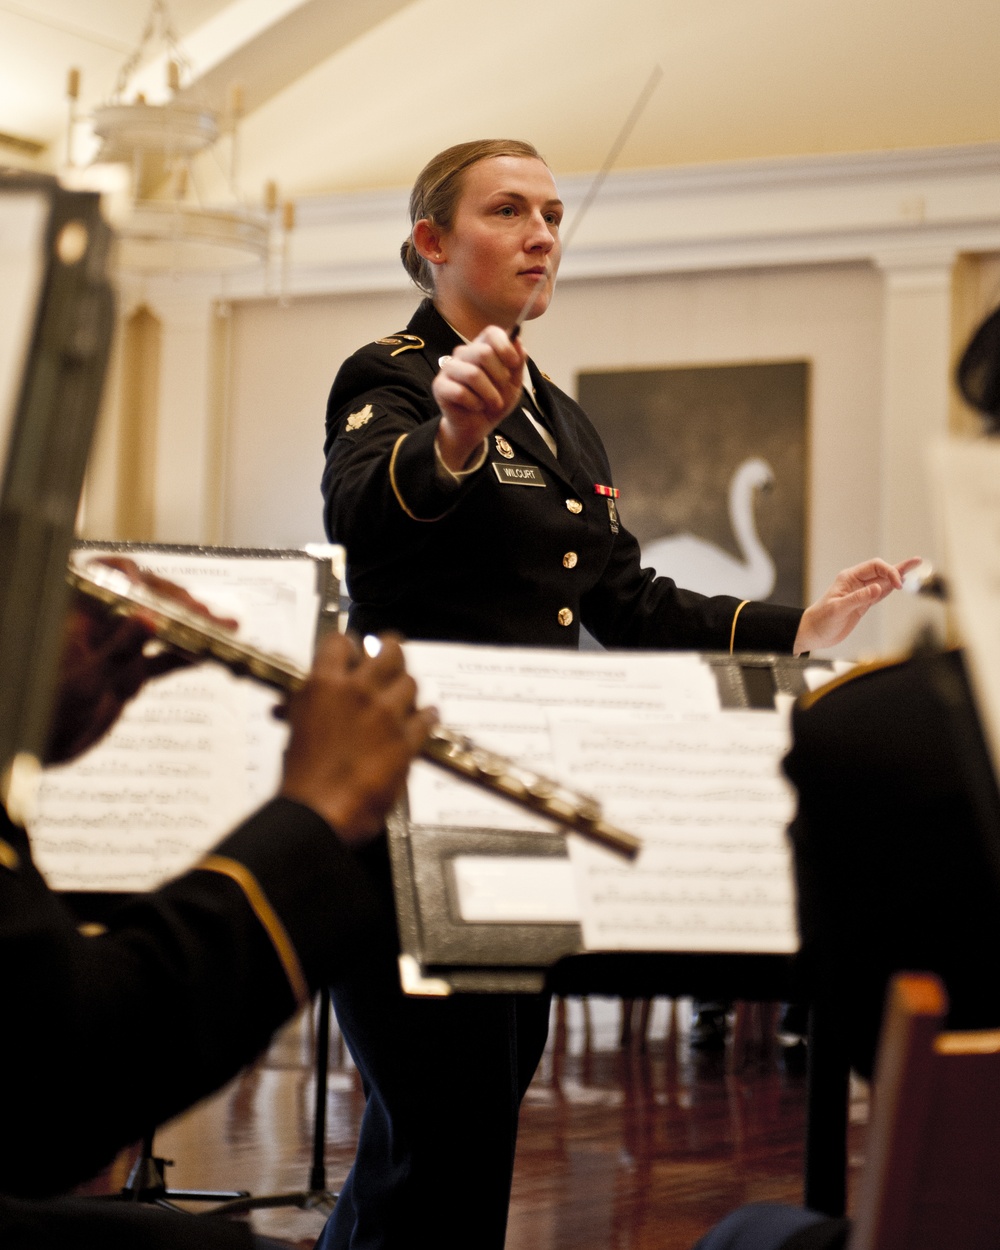 Georgia National Guard Band spreads cheer through music